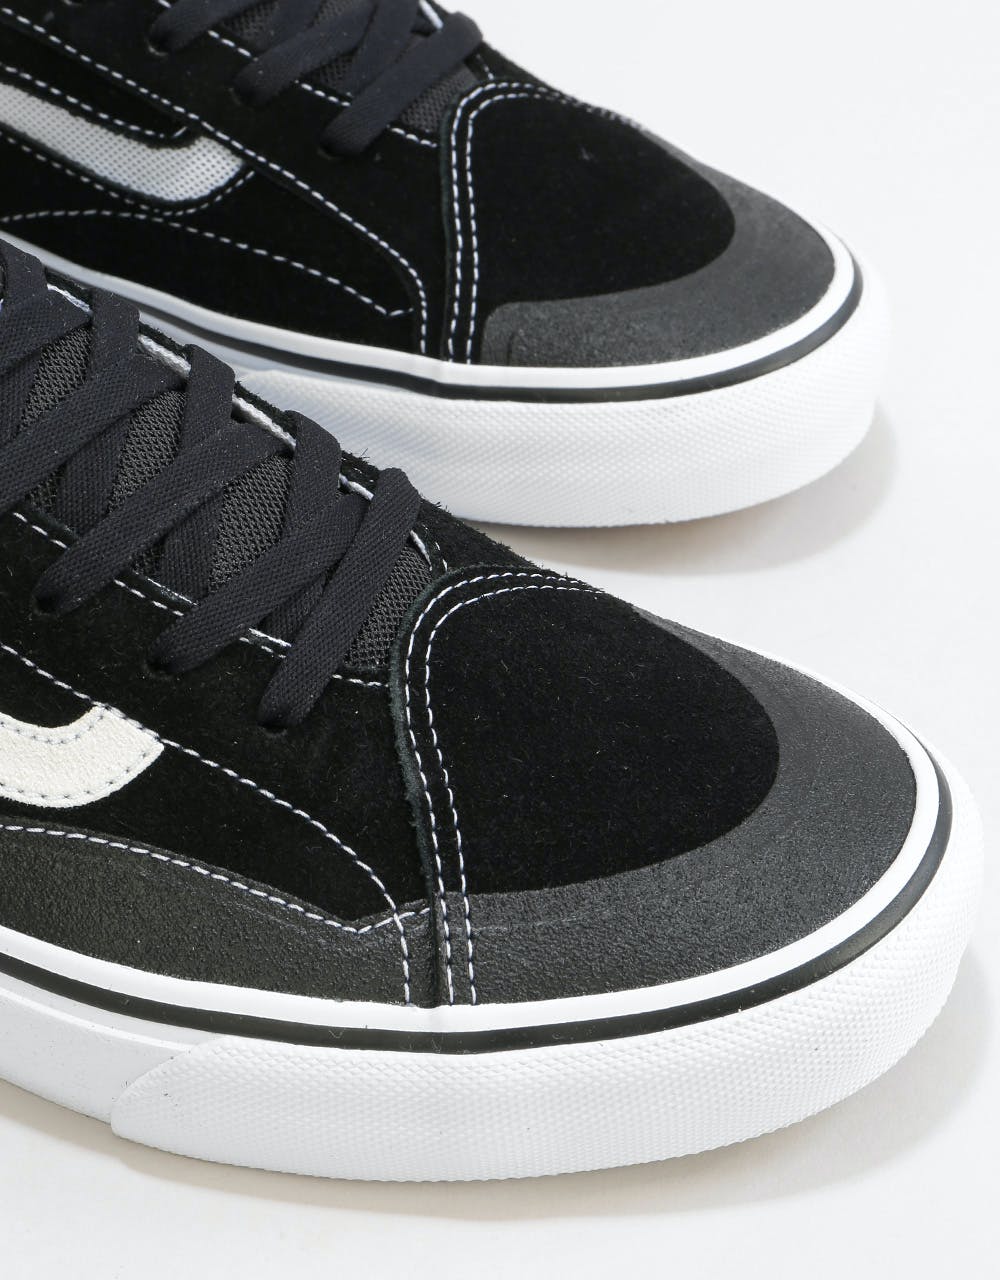 Vans TNT AP Skate Shoes - Black/White